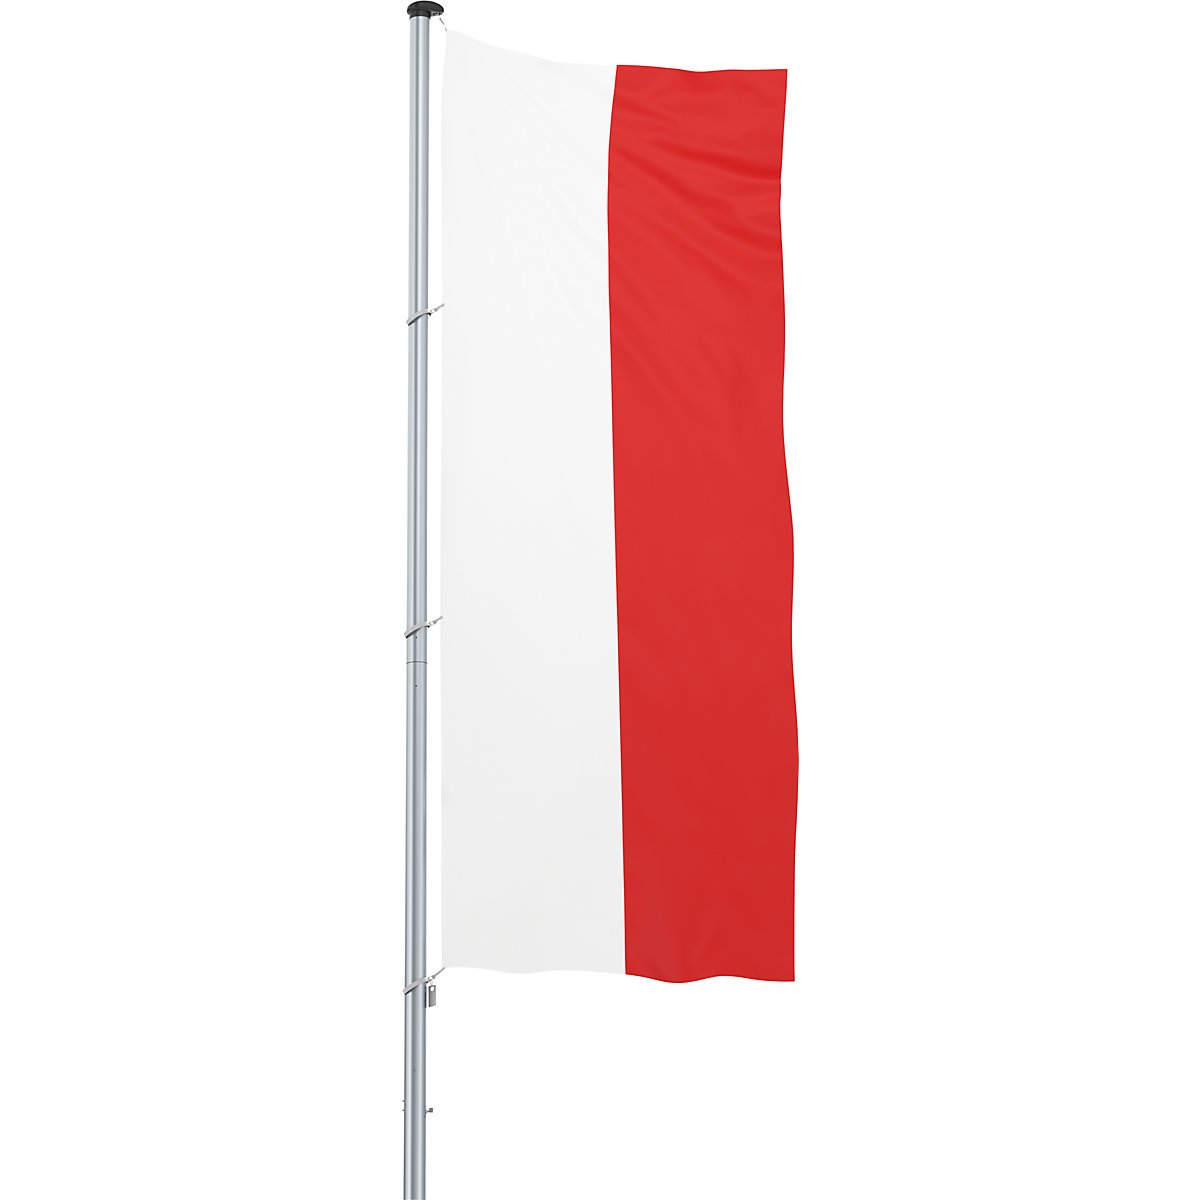 Flaga/flaga państwowa – Mannus, format 1,2 x 3 m, Polska-30